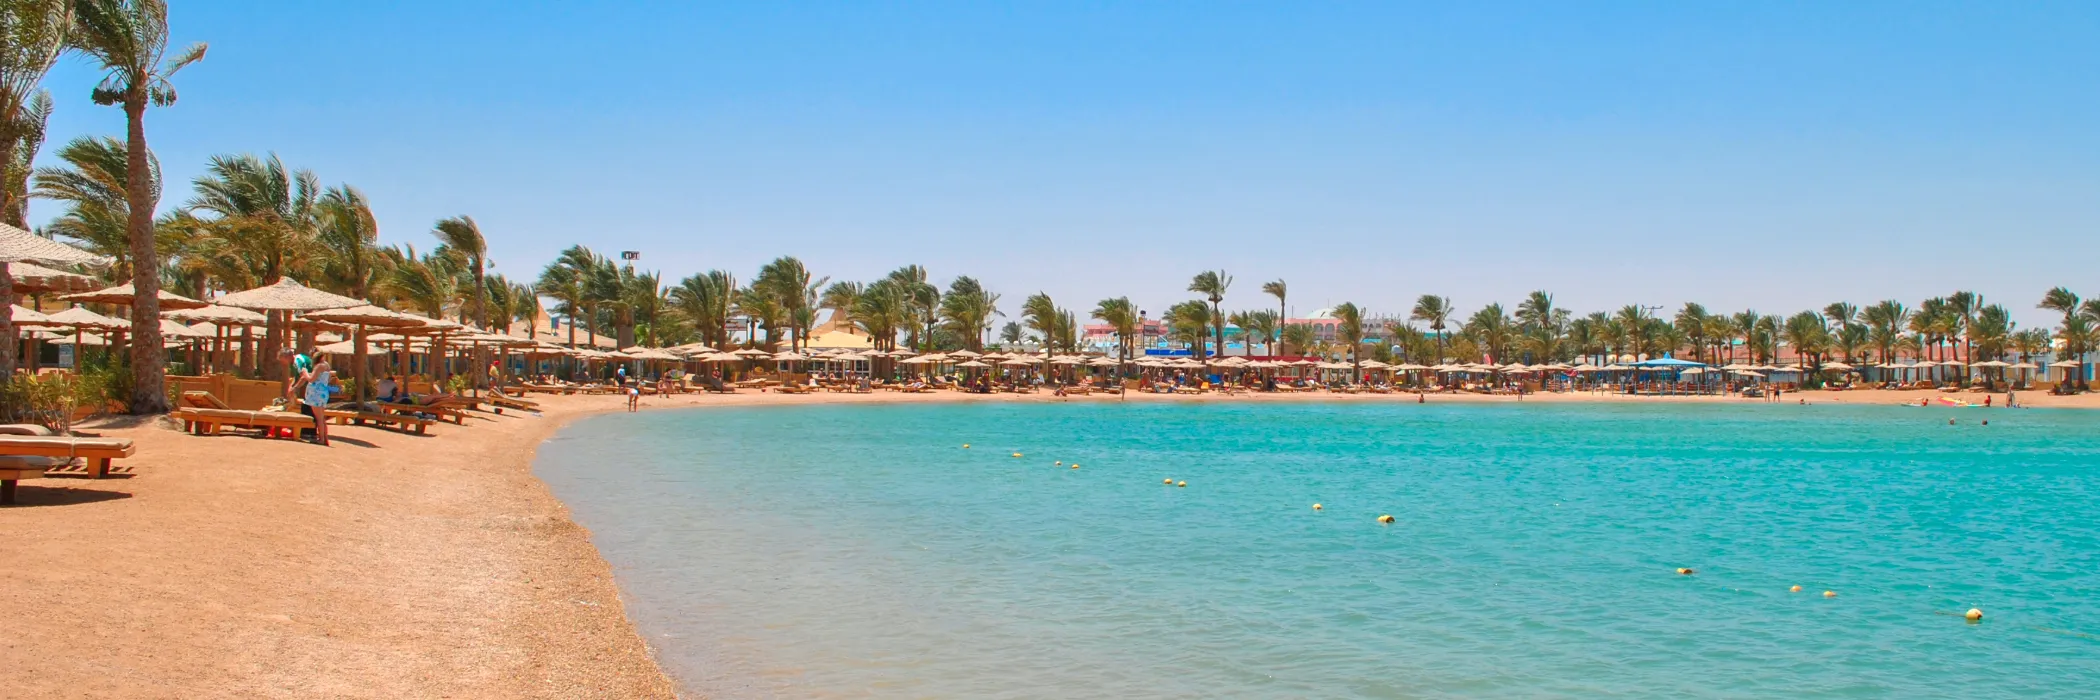 Hurghada Holidays - Egypt